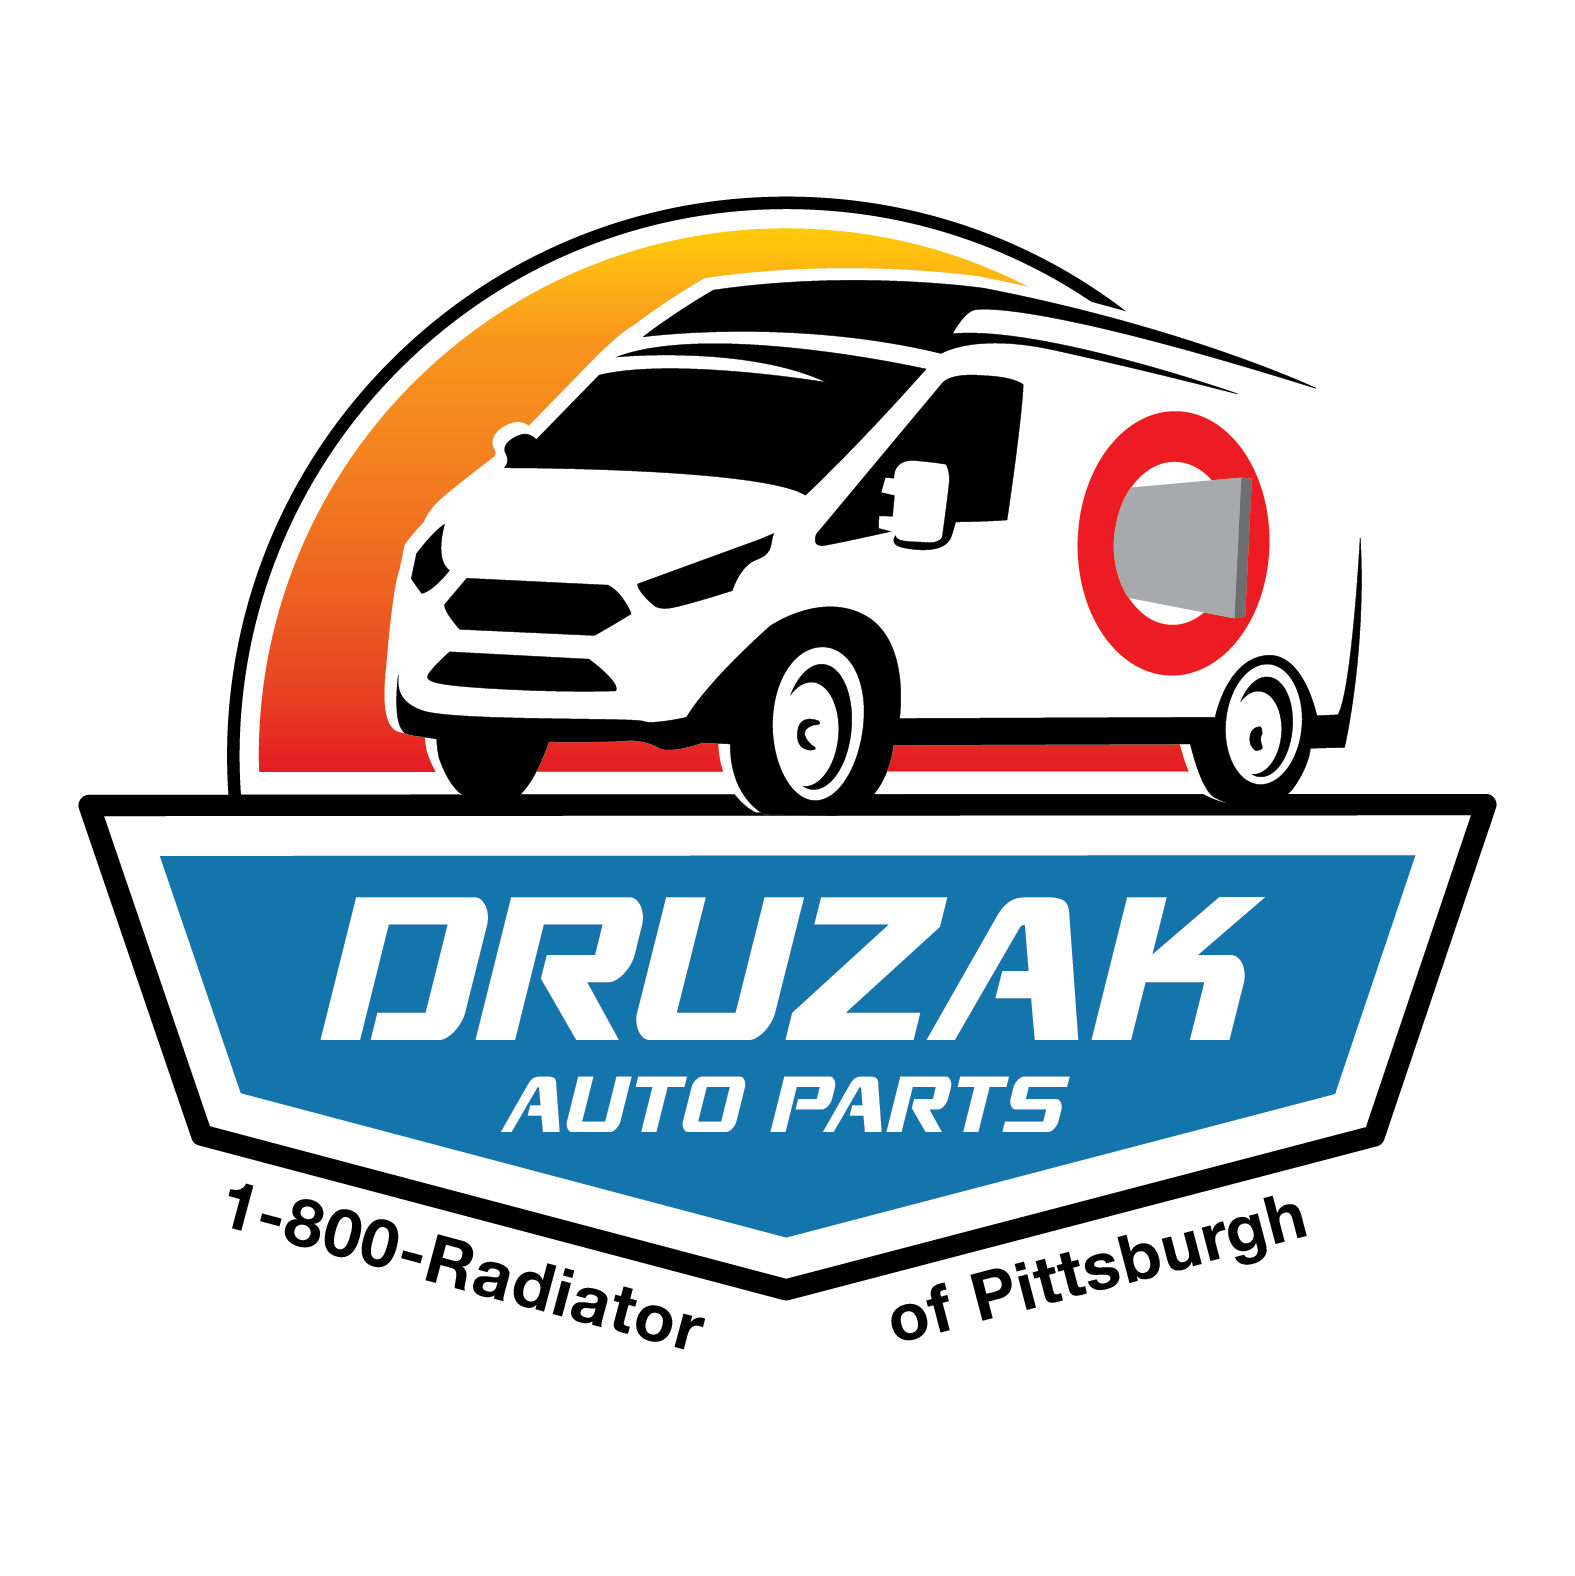 Druzak Auto Parts logo